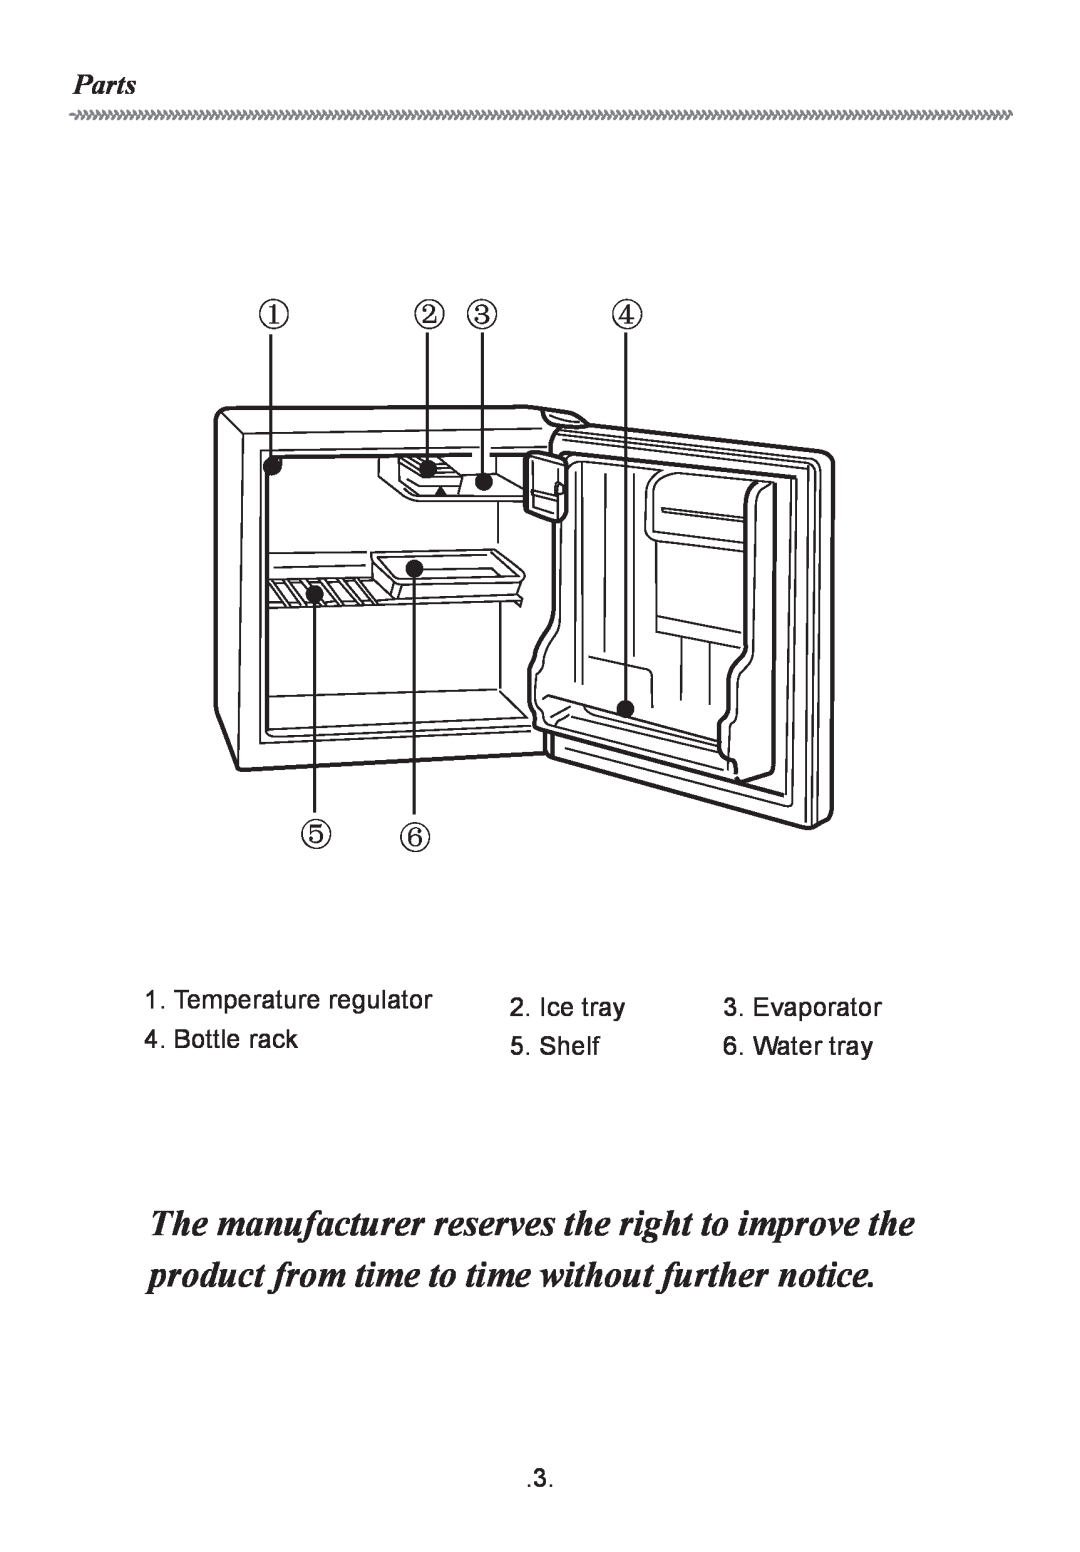 Haier HR-62 manual Parts, Temperature regulator, Ice tray, Evaporator, Bottle rack, Shelf, Water tray 